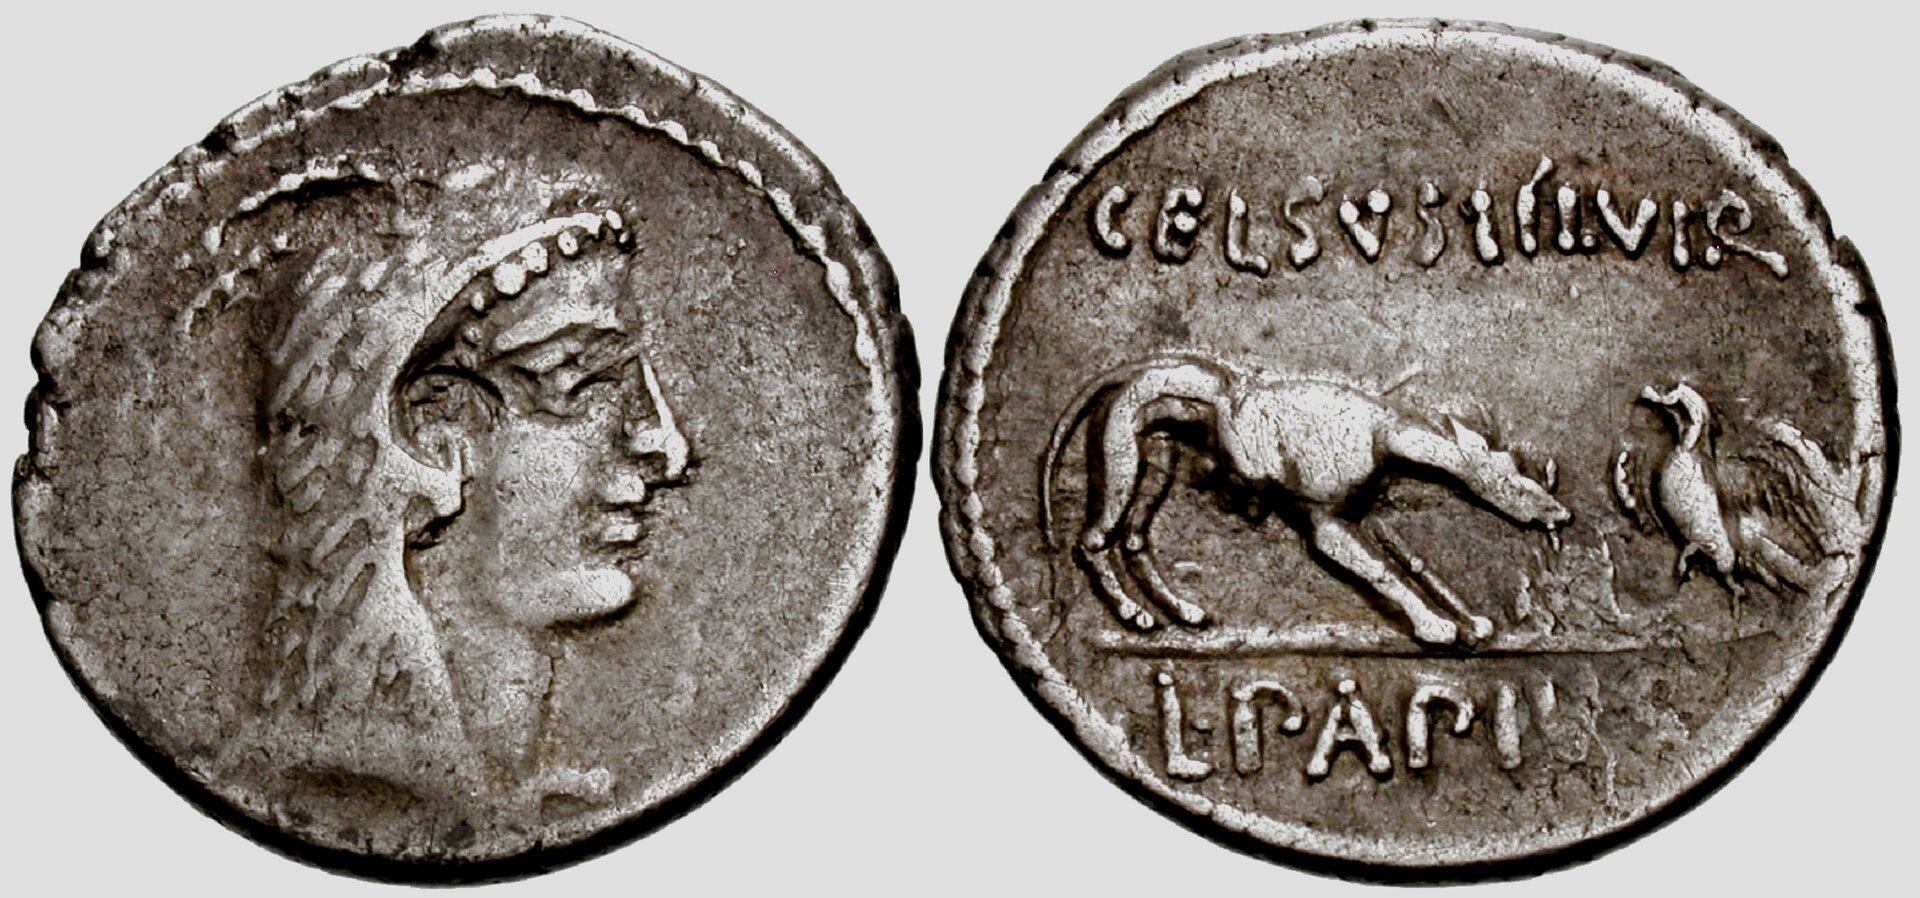 version 2 Papius Celsus (Juno Sospita - wolf and eagle) Crawford 472-1 jpg version.jpg